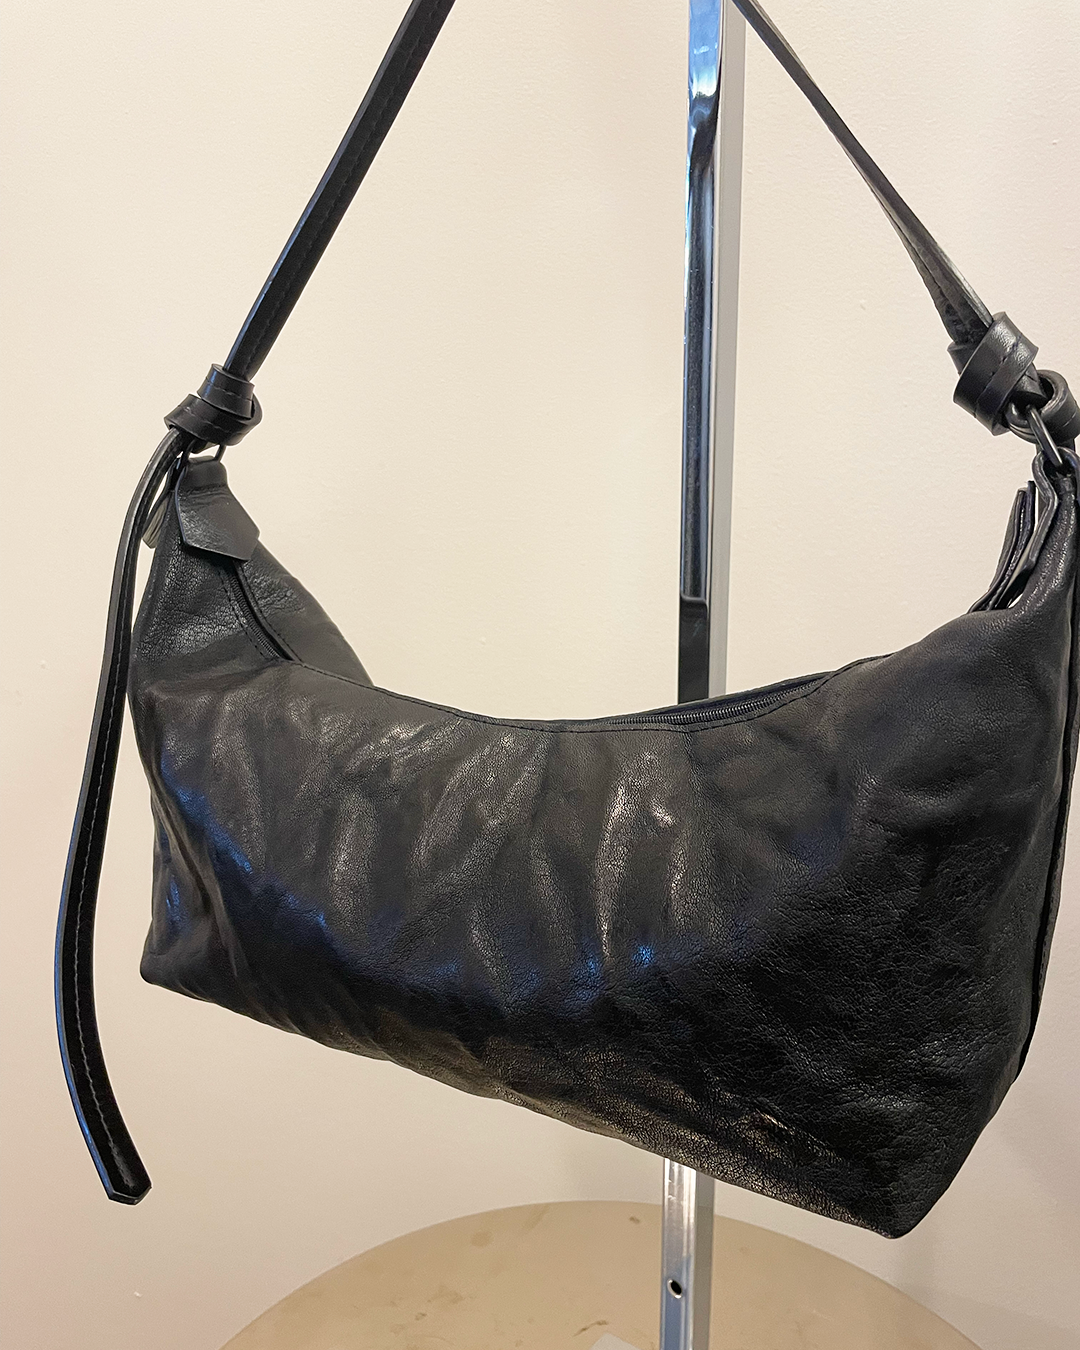 Diese Woche beliebt Deborah Kent\'s May Rumpled B. Sling Tampa Bag by South in Basalt Boutique Sheepskin — Bags Zippered